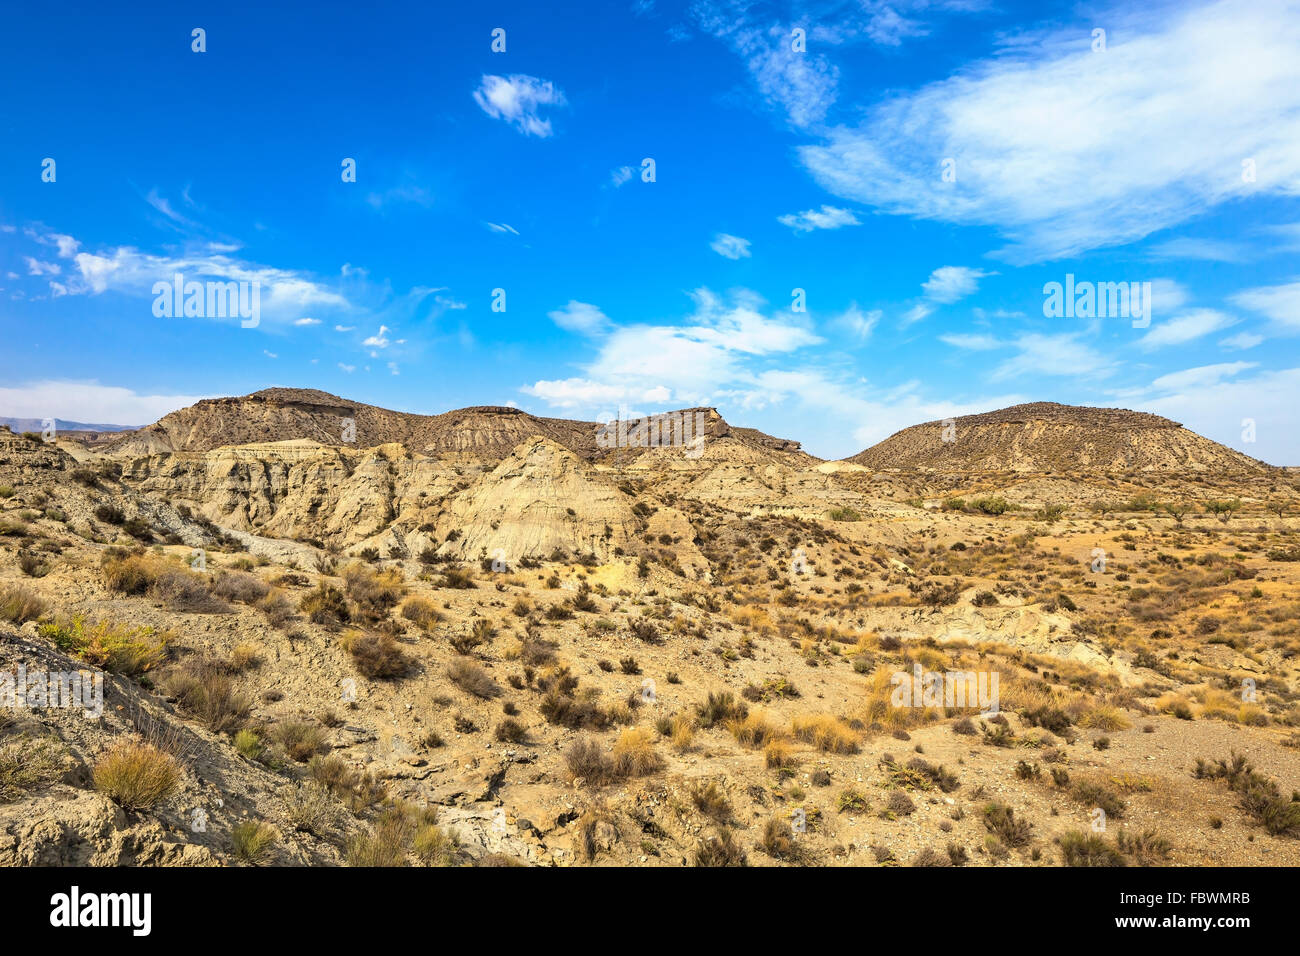 Tabernas desert mountains, in spanish Desierto de Tabernas. Europe only desert. Almeria, andalusia region, Spain. Protected wild Stock Photo